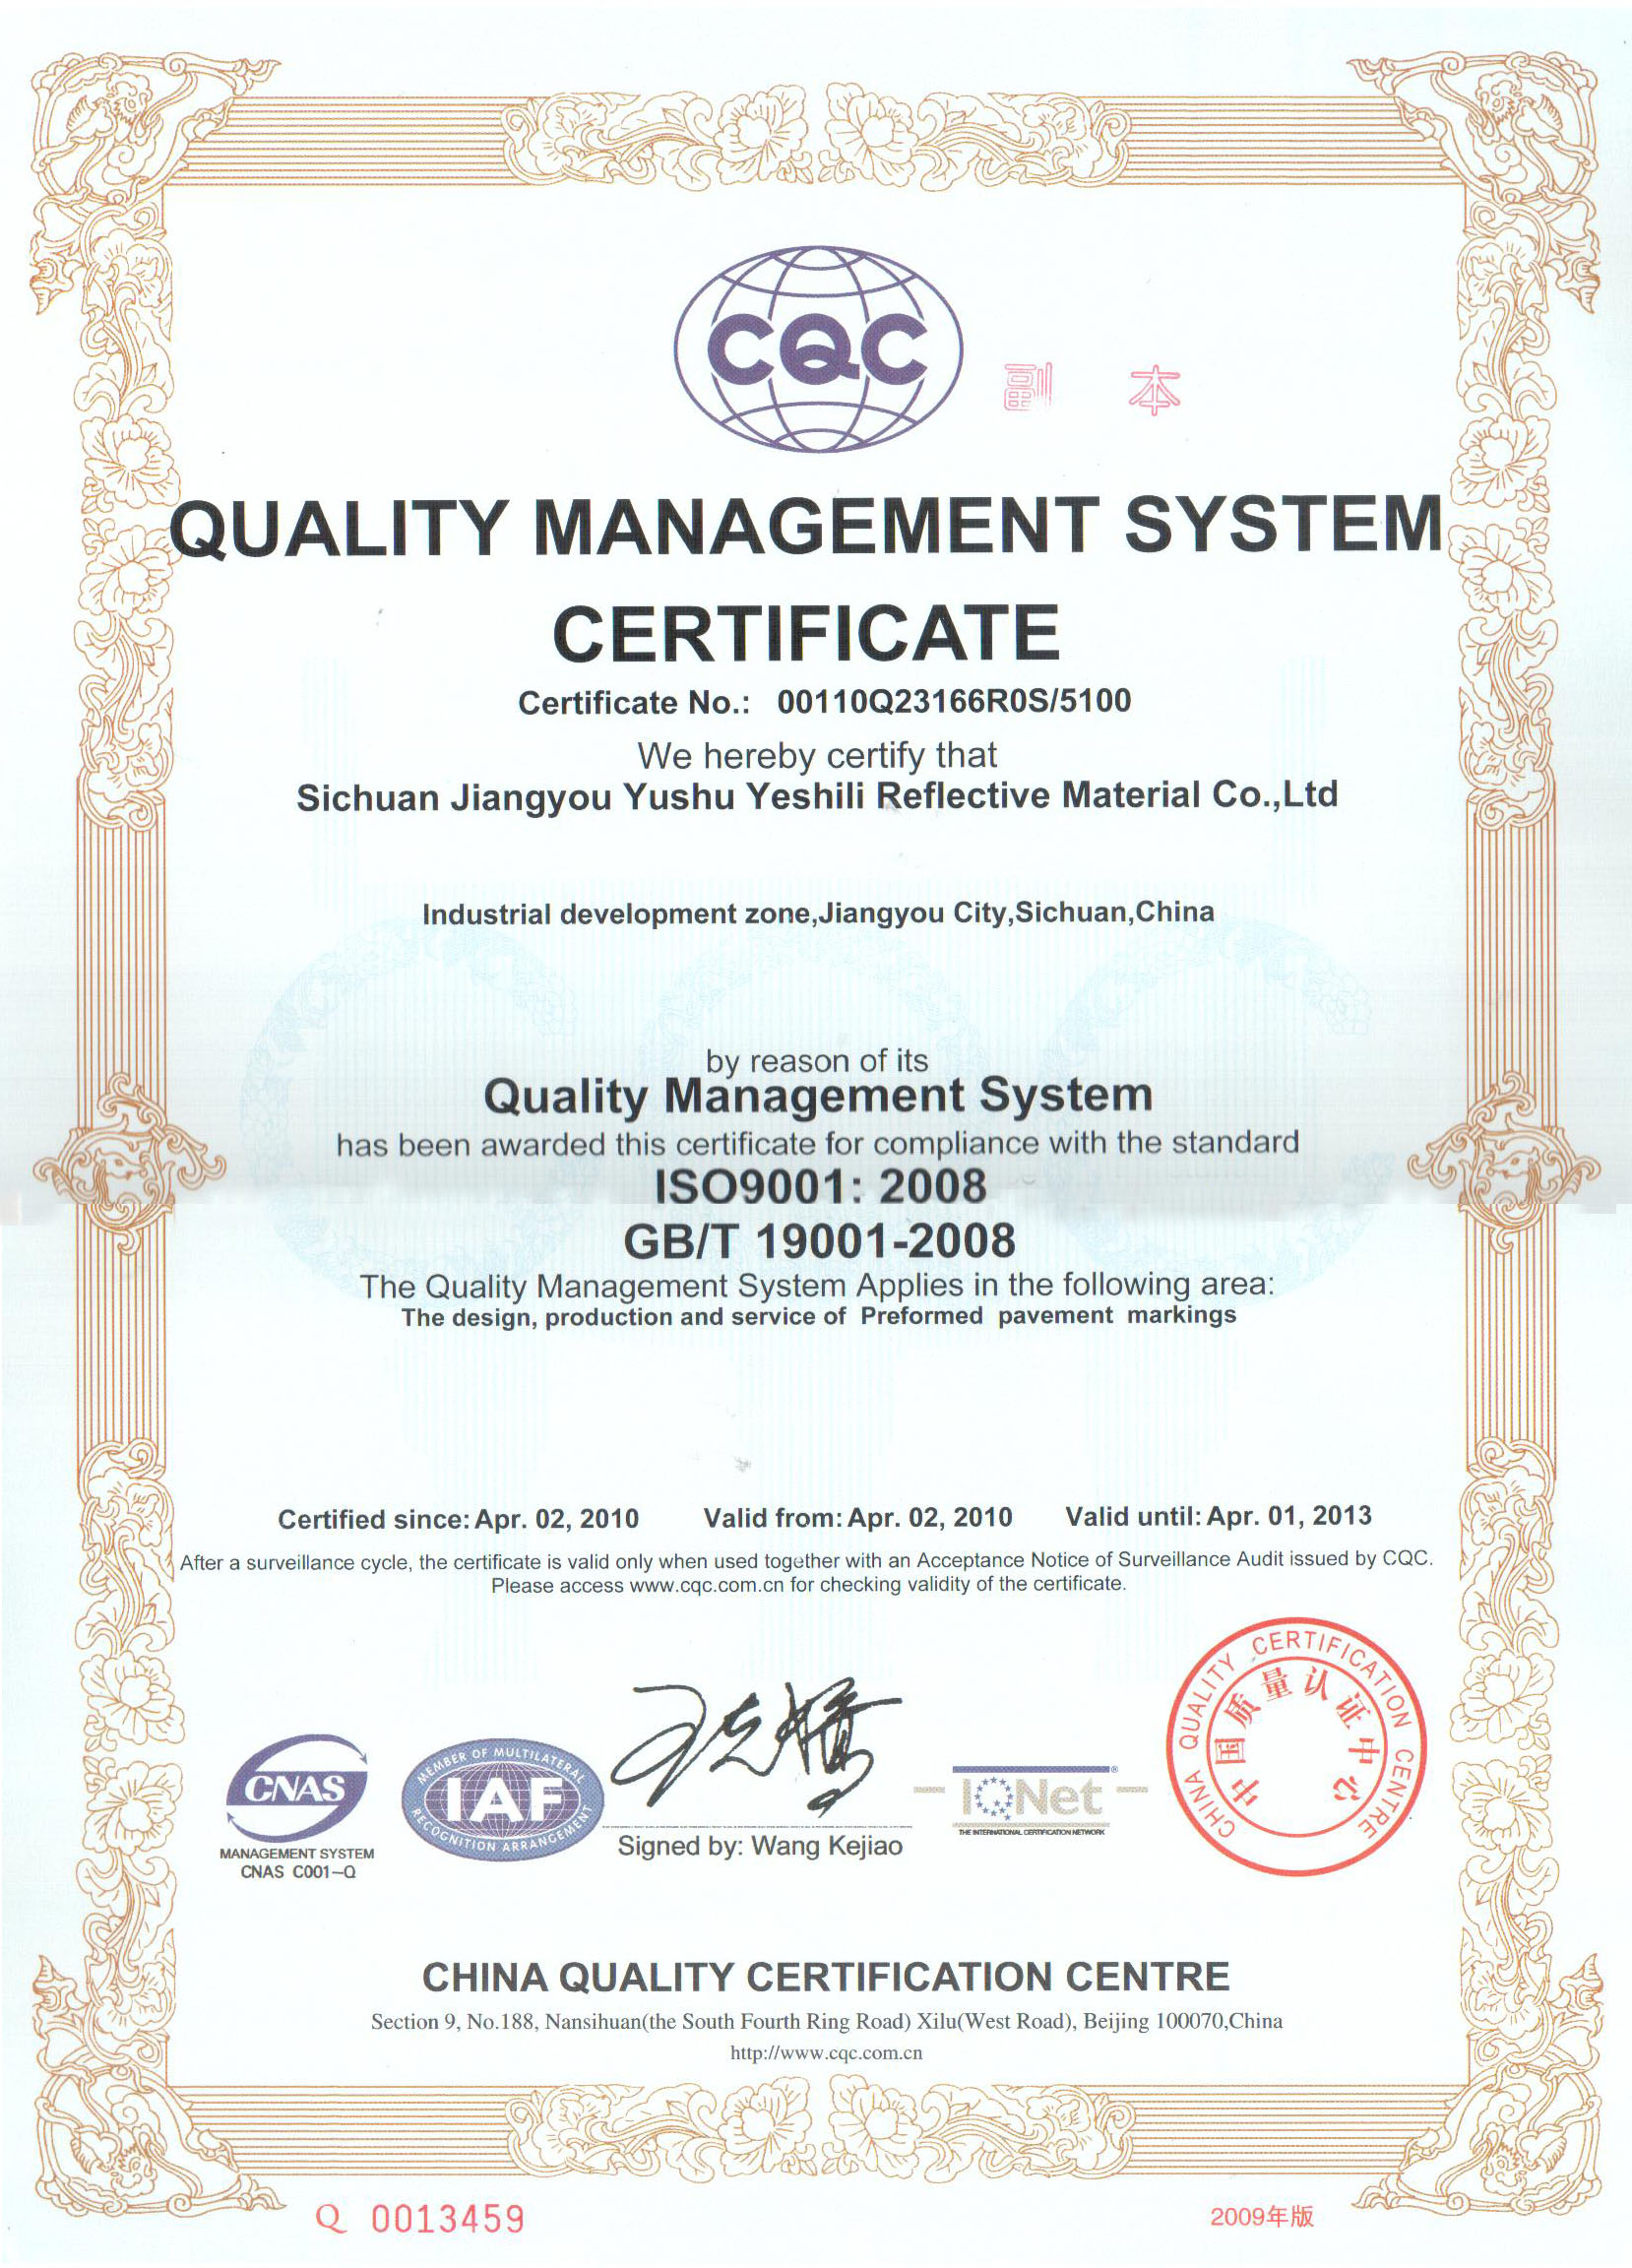 QUALITY MANAGEMENT SYSTEM CERTIFICATEo9v